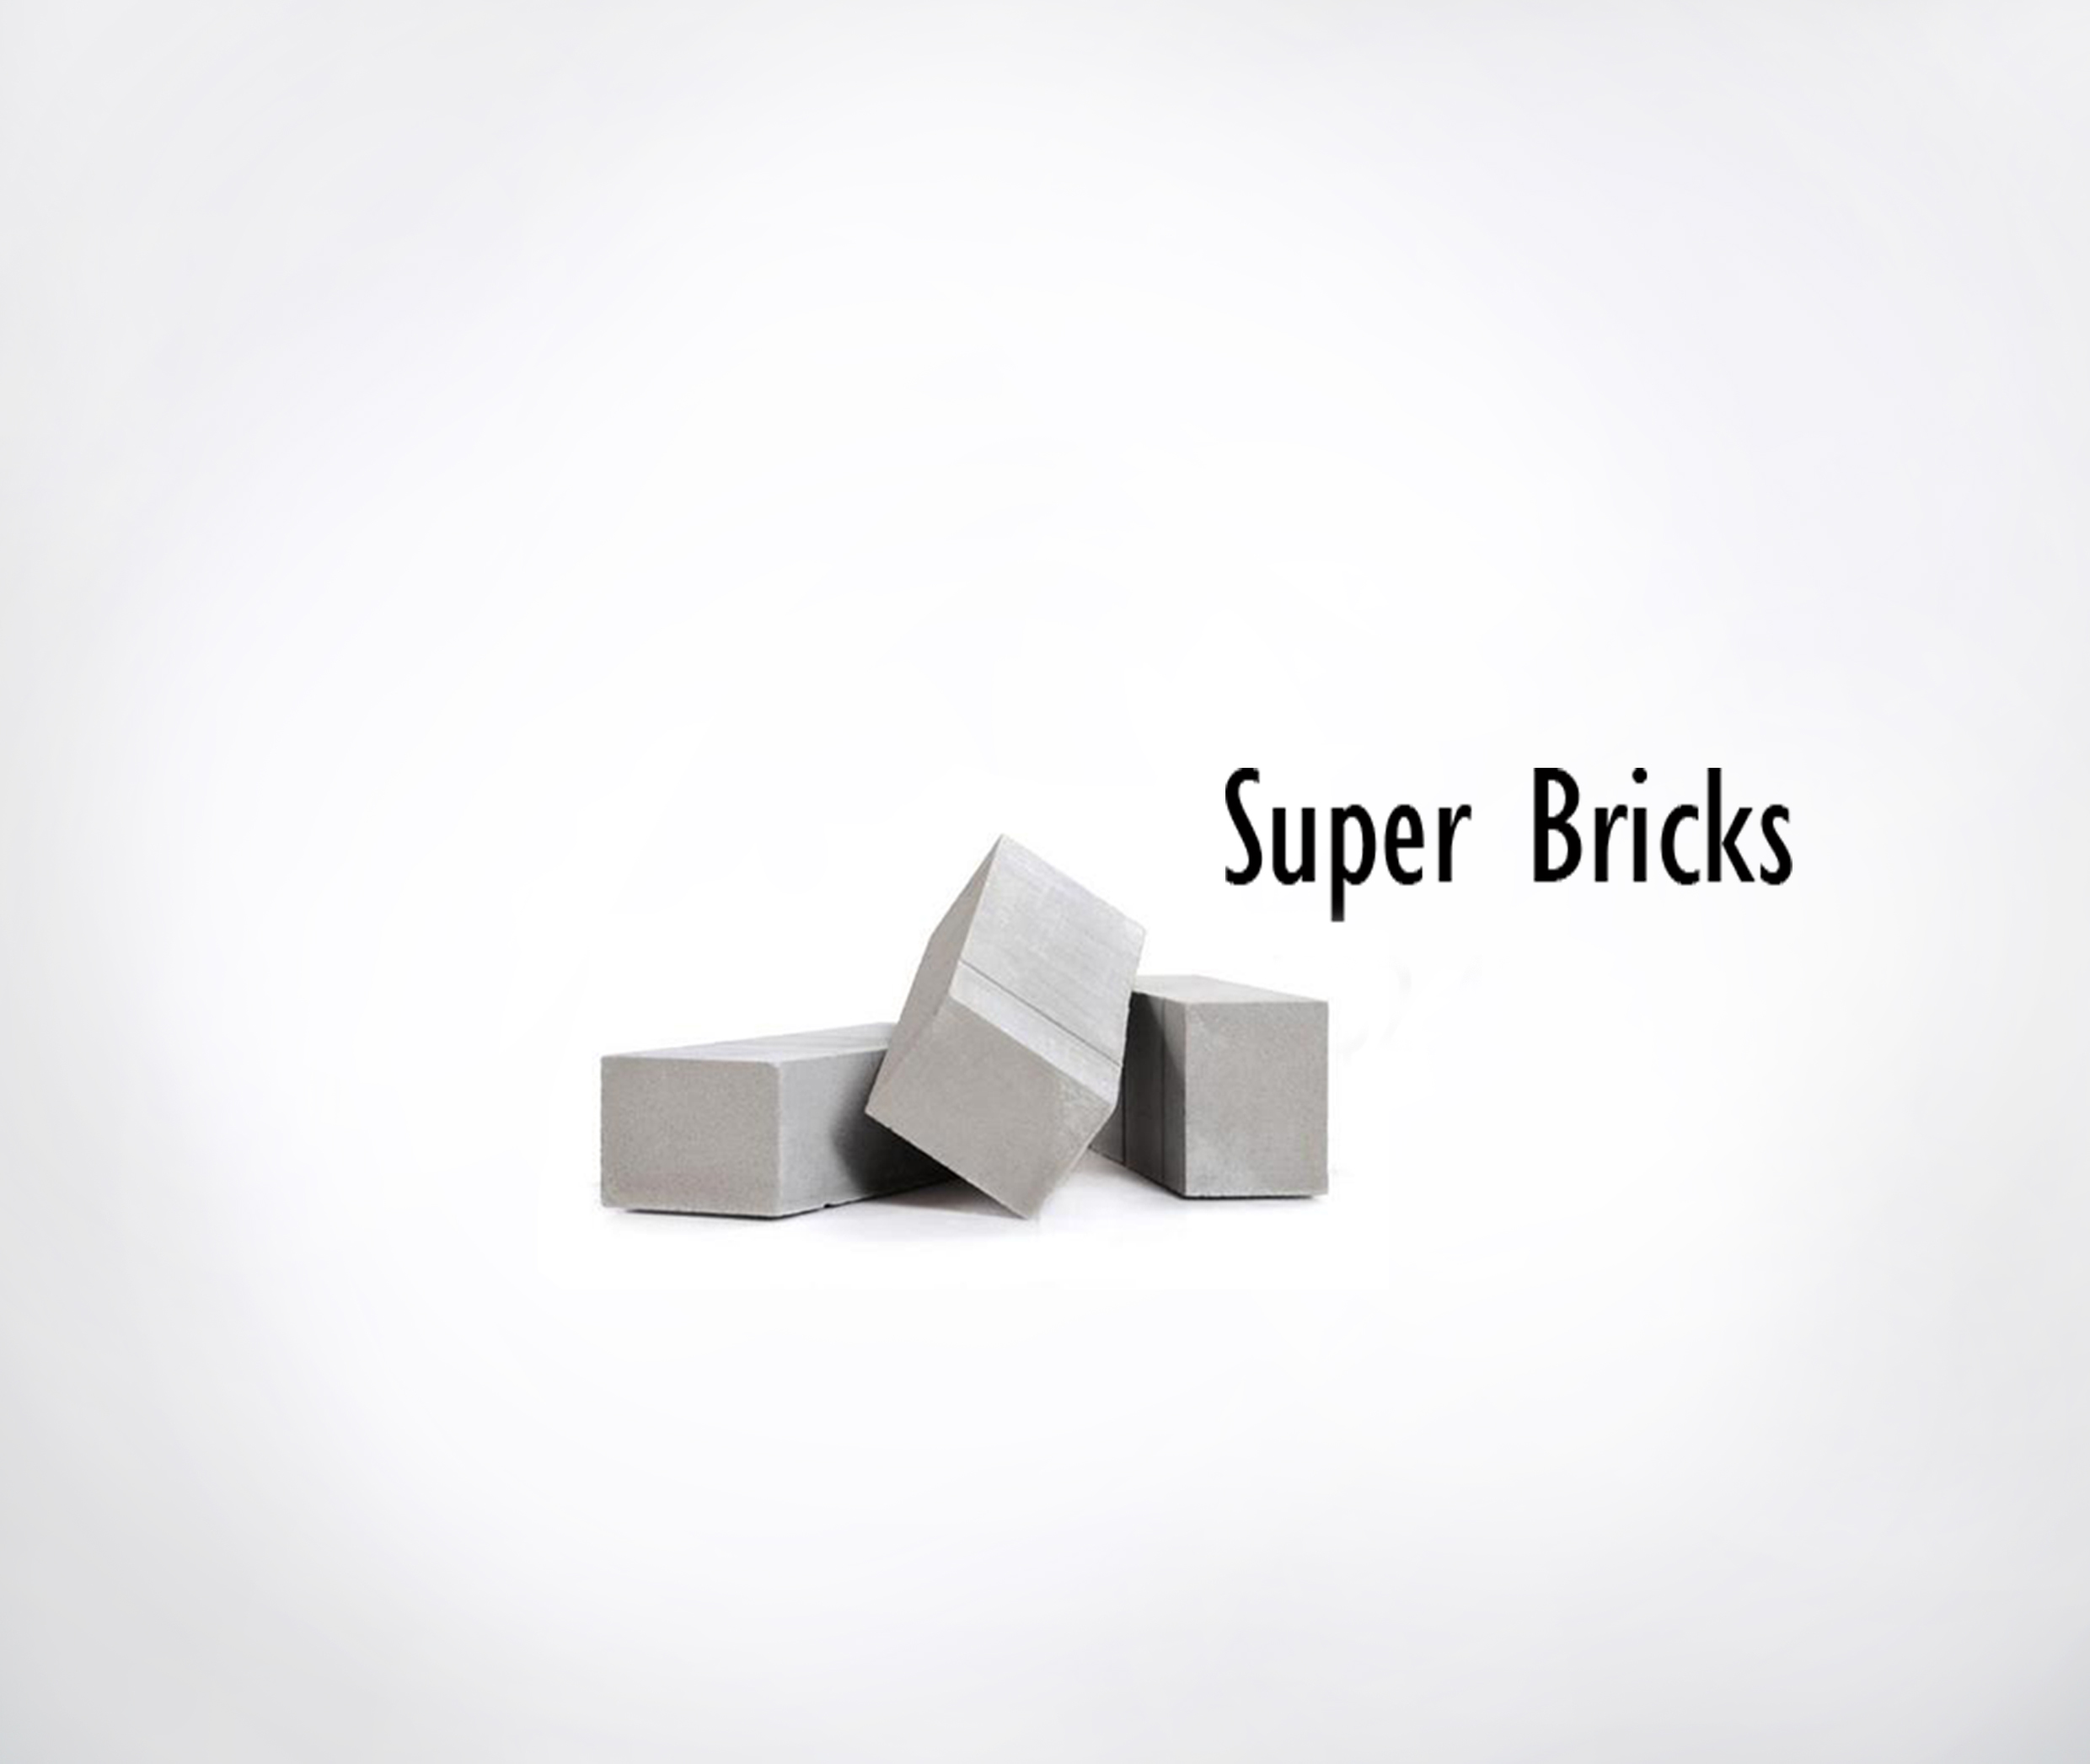 Super Bricks